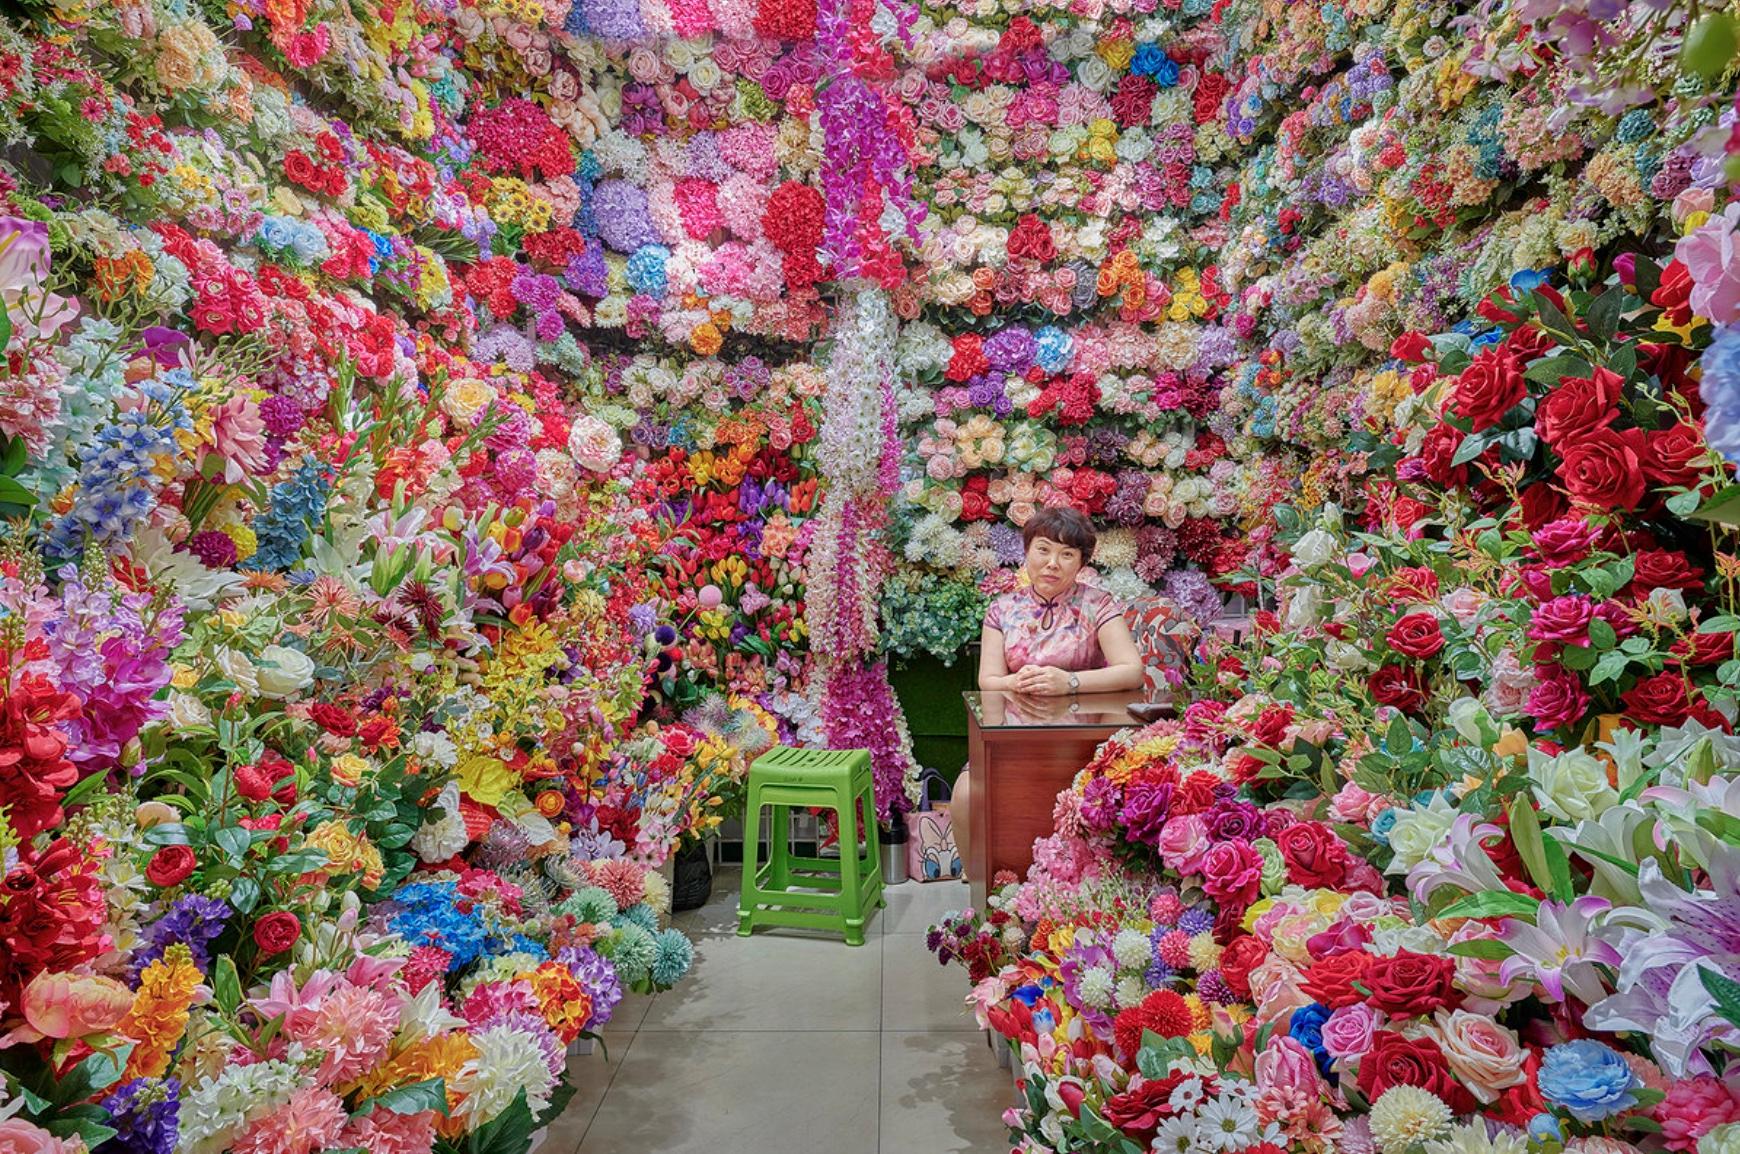 David Burdeny Figurative Photograph - Flower Vendor 01, Yiwu, China (44" x 66")